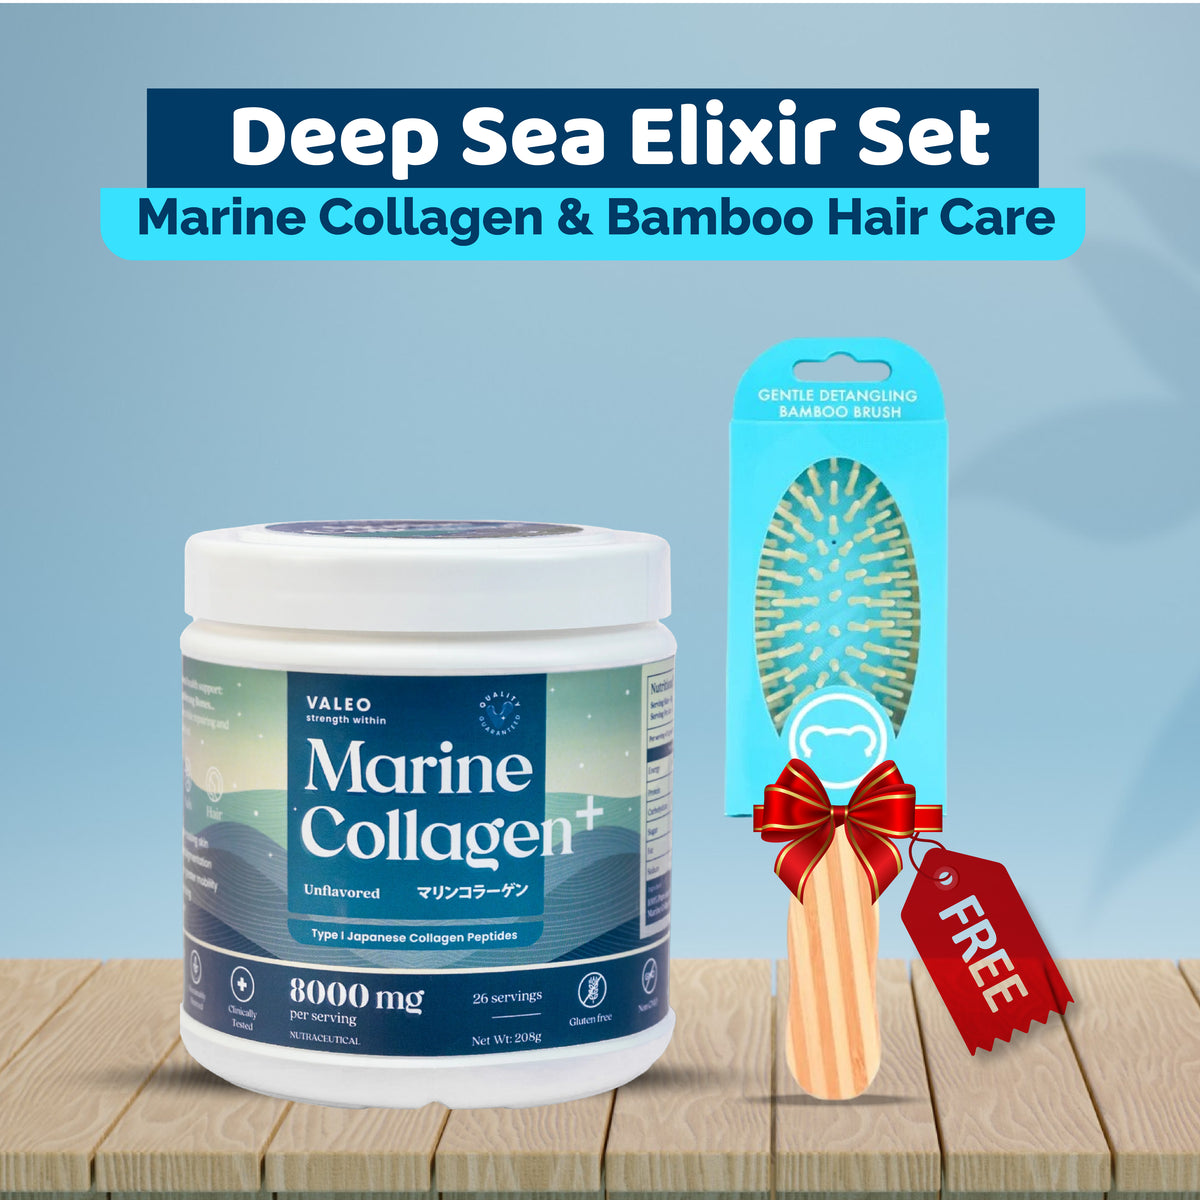 Valeo Marine Collagen and FREE SugarBearHair Gentle Detangling Bamboo Hair Brush Combo